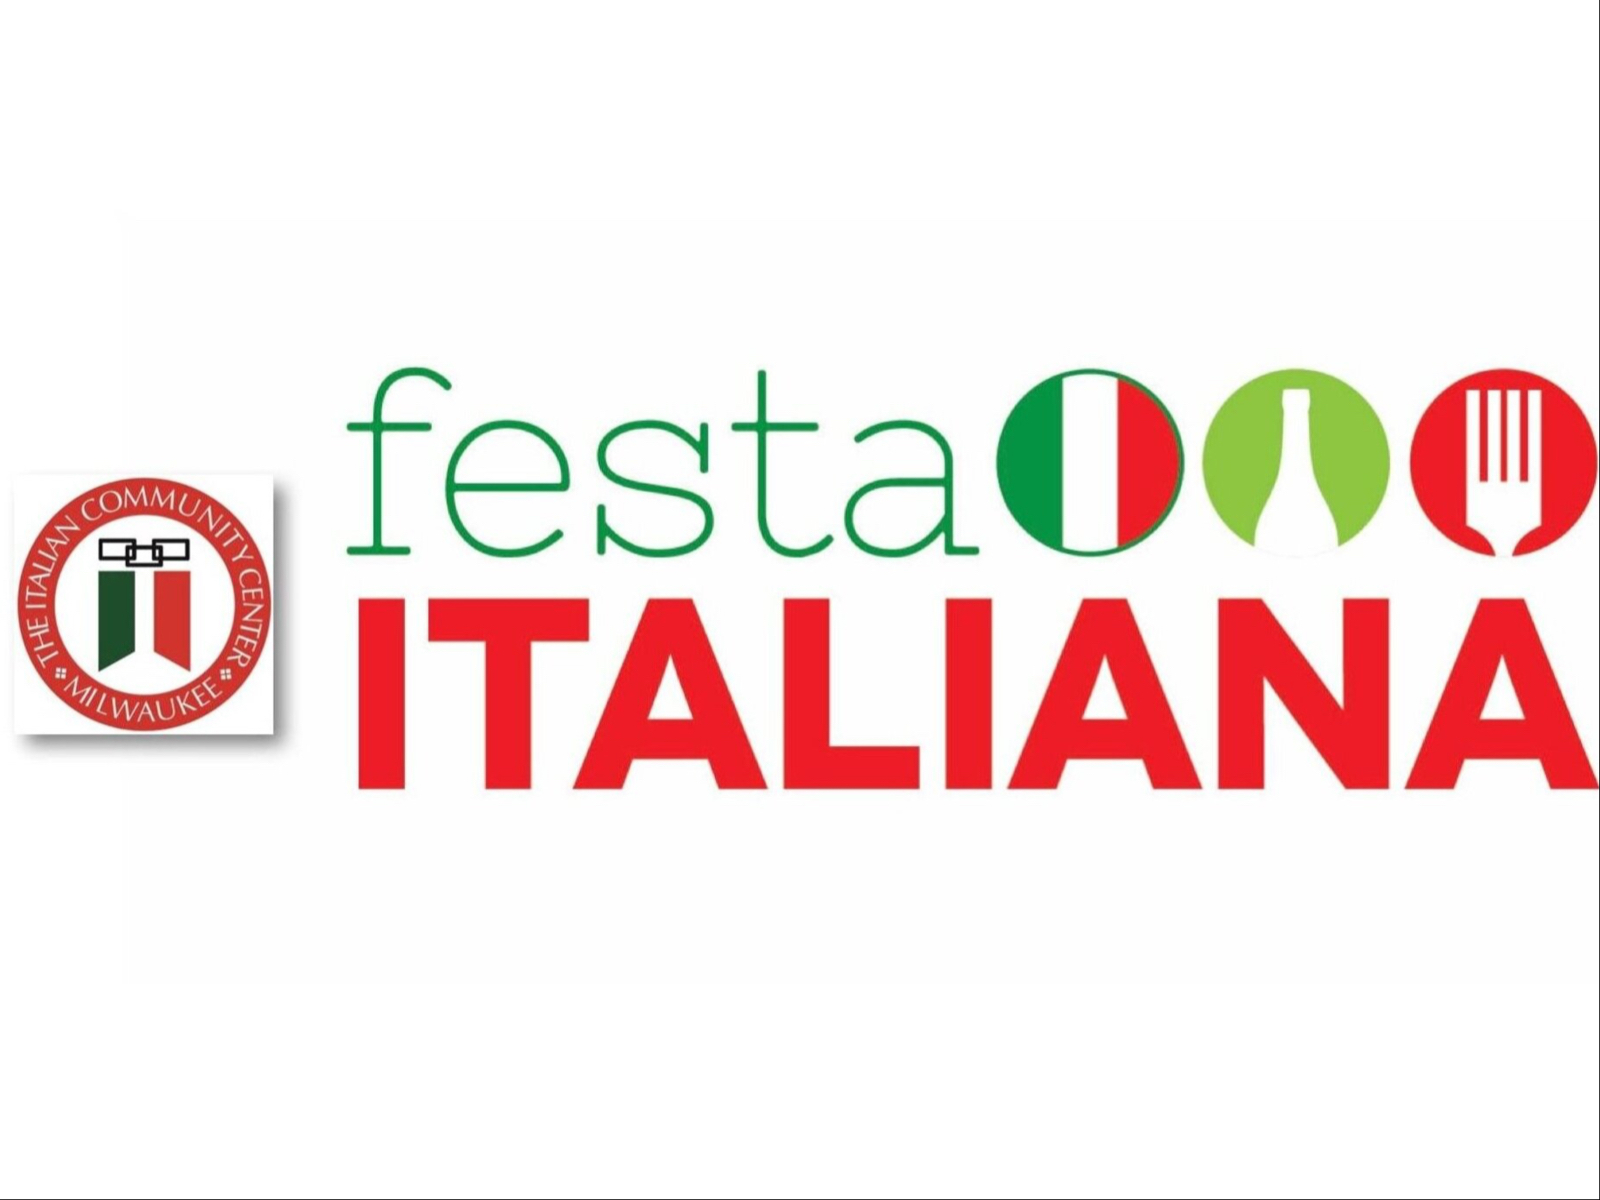 Festa Italiana announces its 2023 dates